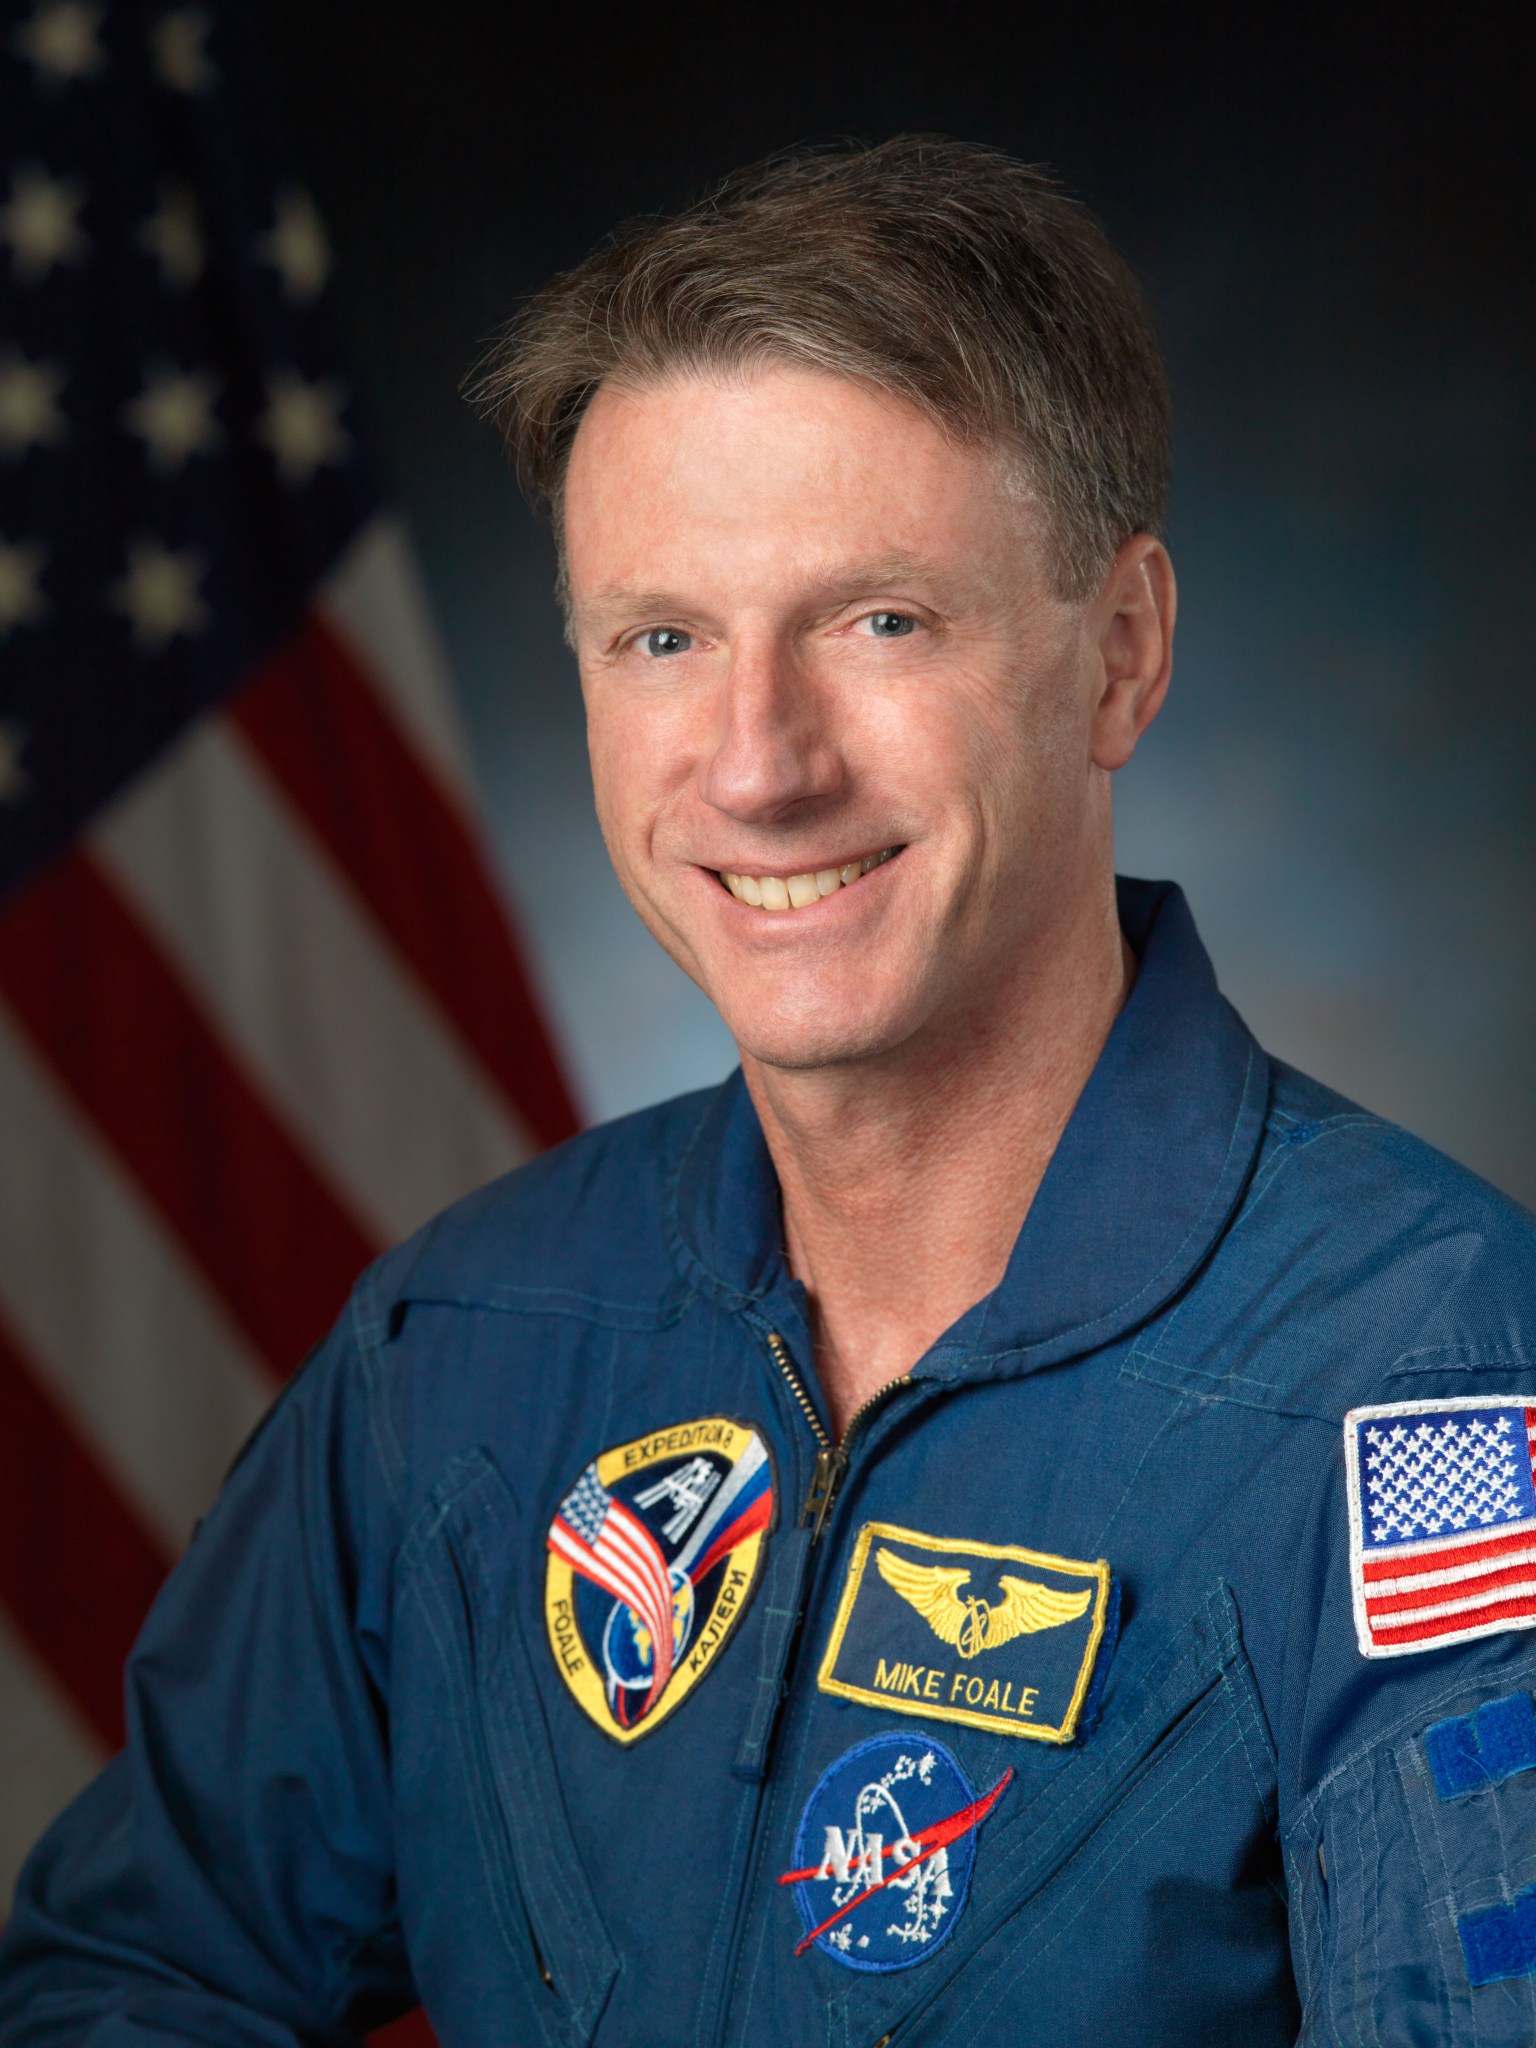 NASA astronaut Michael Foale